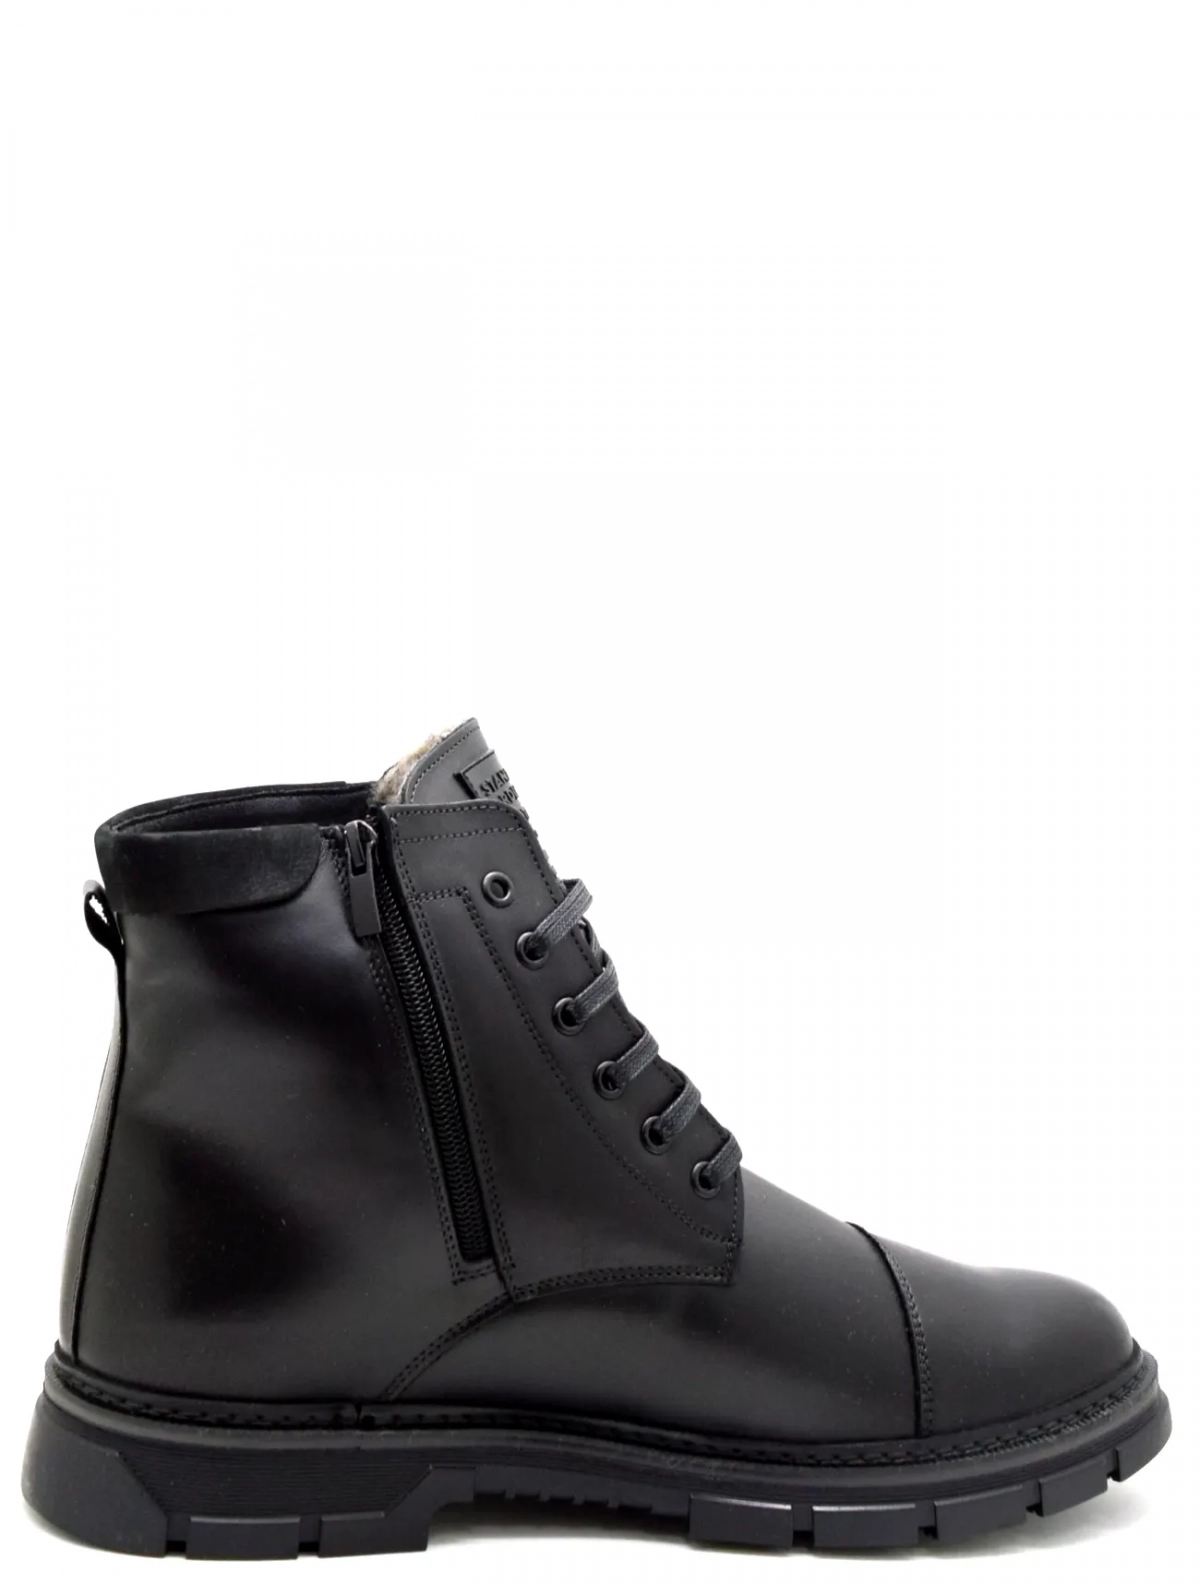 Marco Tredi MR06-460-969-17 мужские ботинки